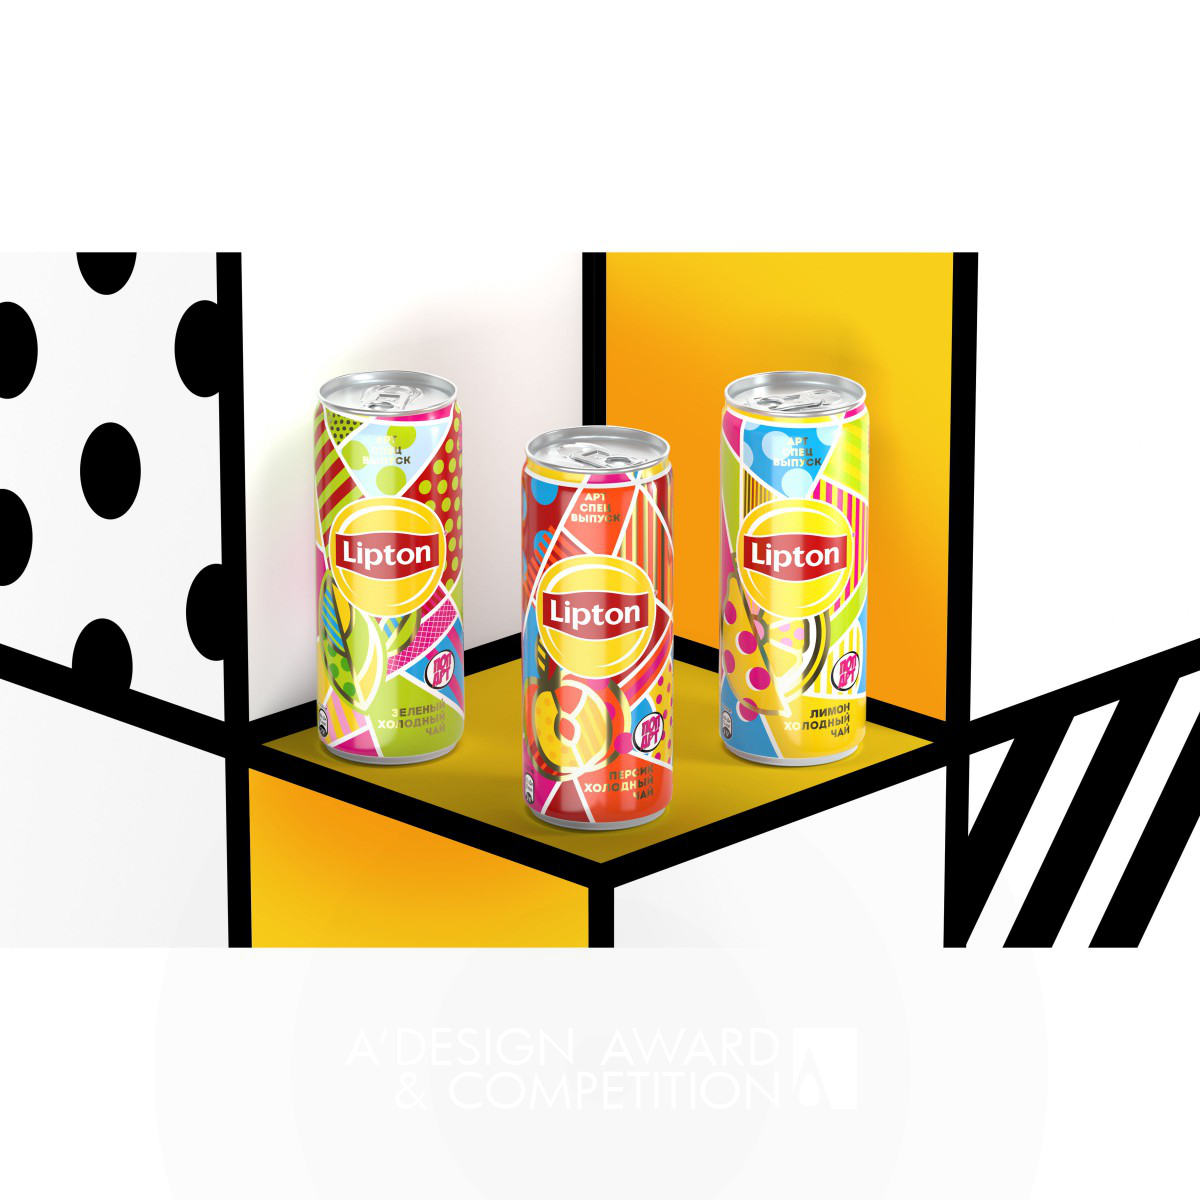 PepsiCo Design & Innovation Beverage